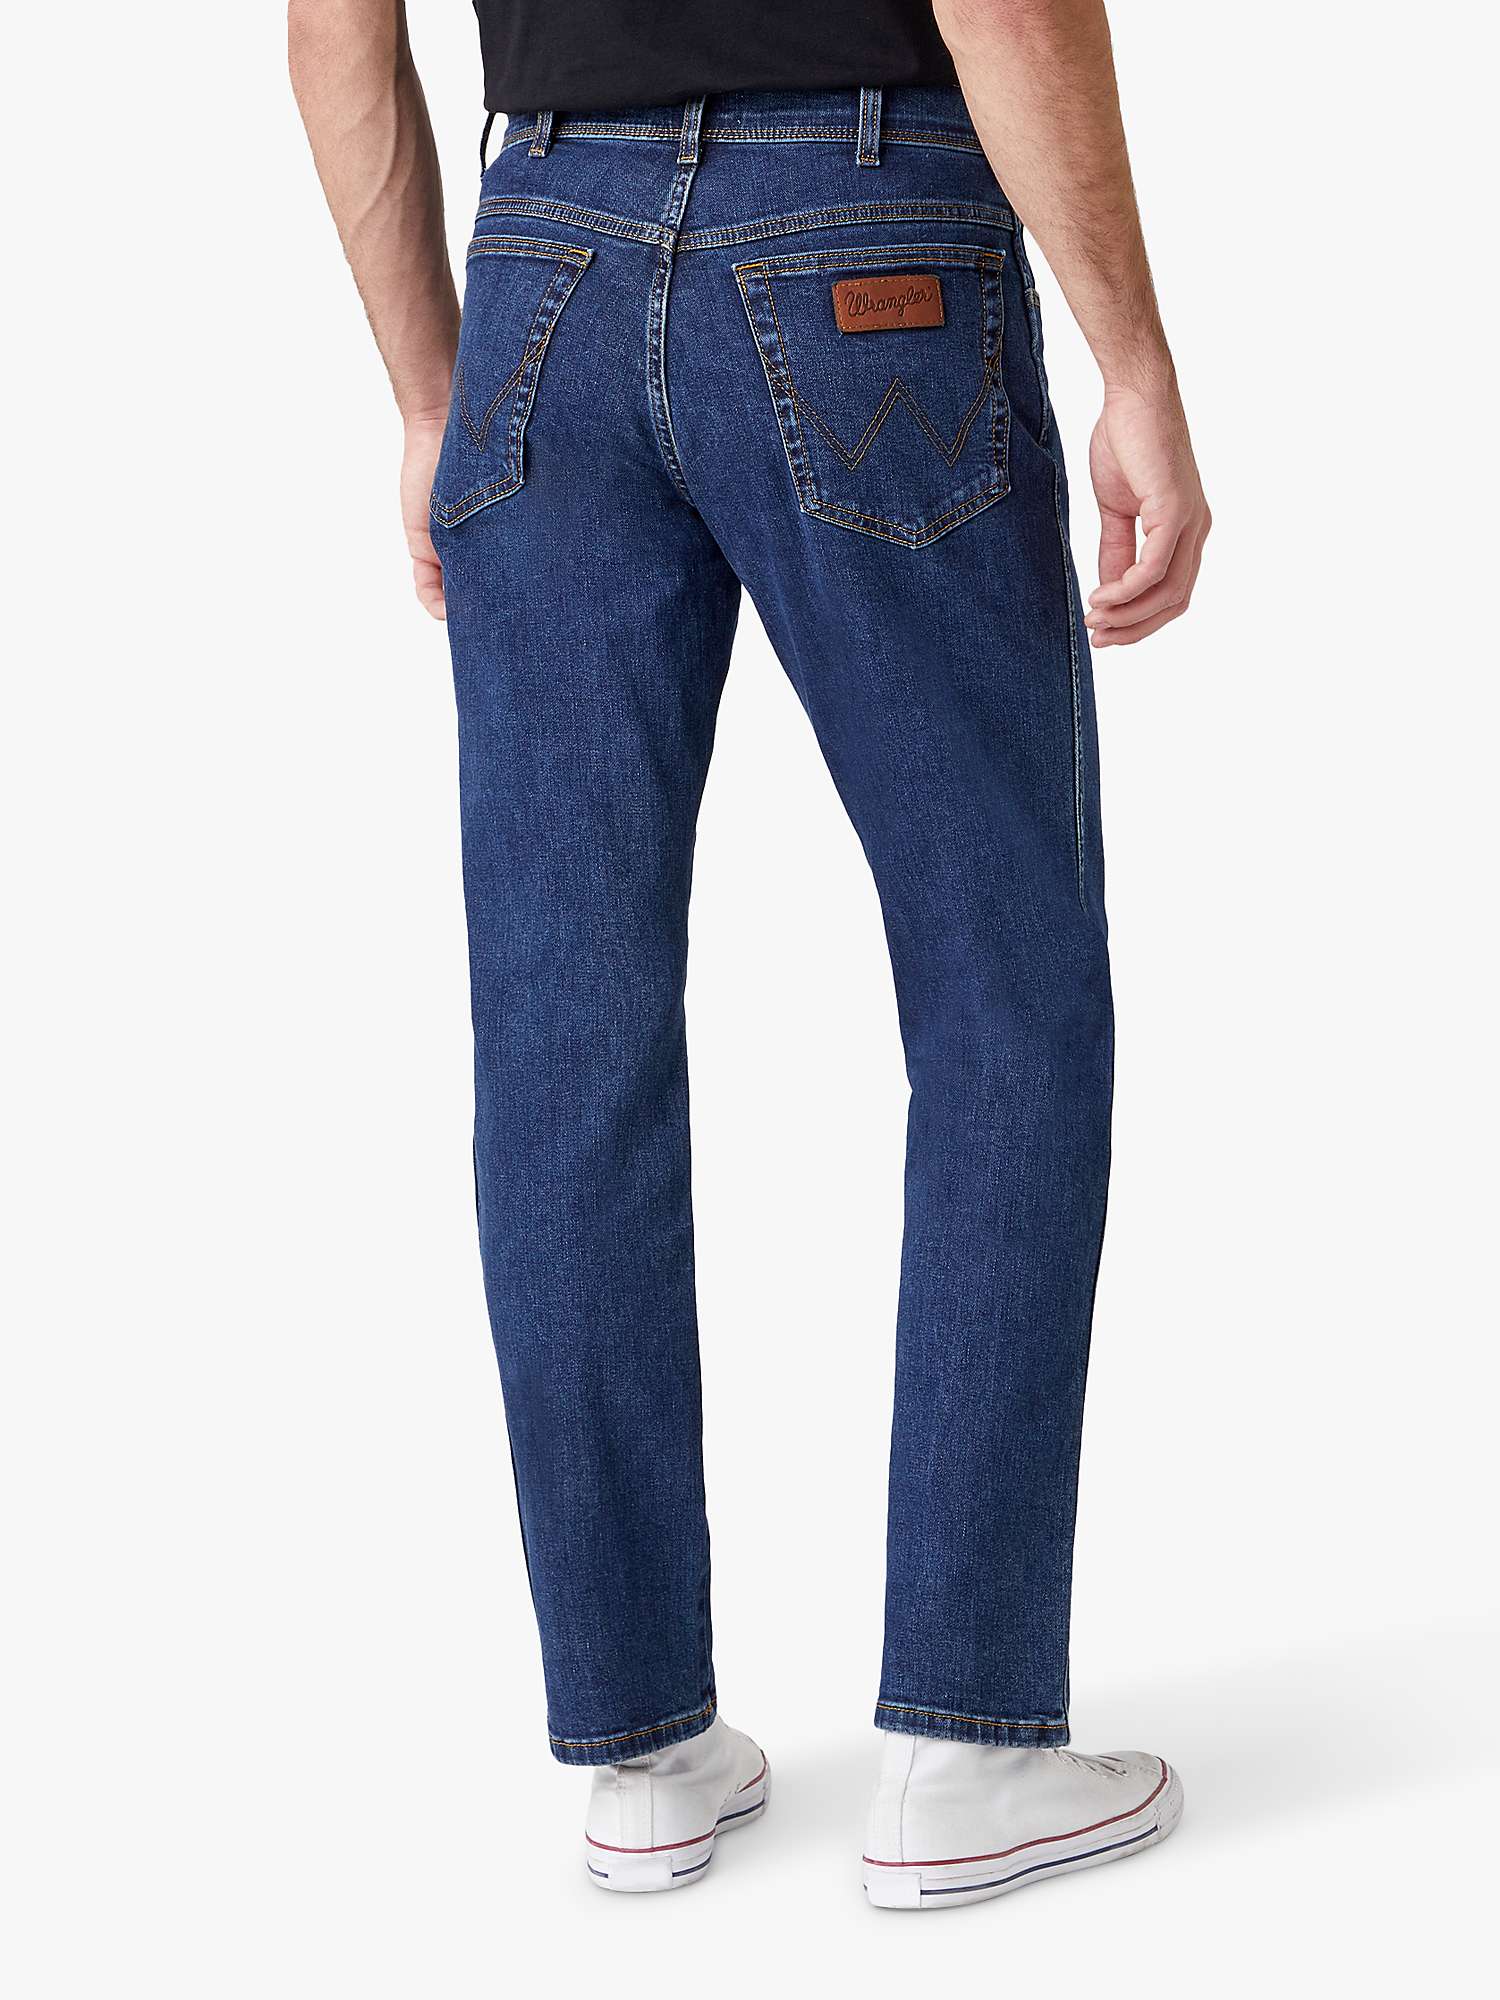 Buy Wrangler Texas Regular Fit Jeans, Blue Online at johnlewis.com